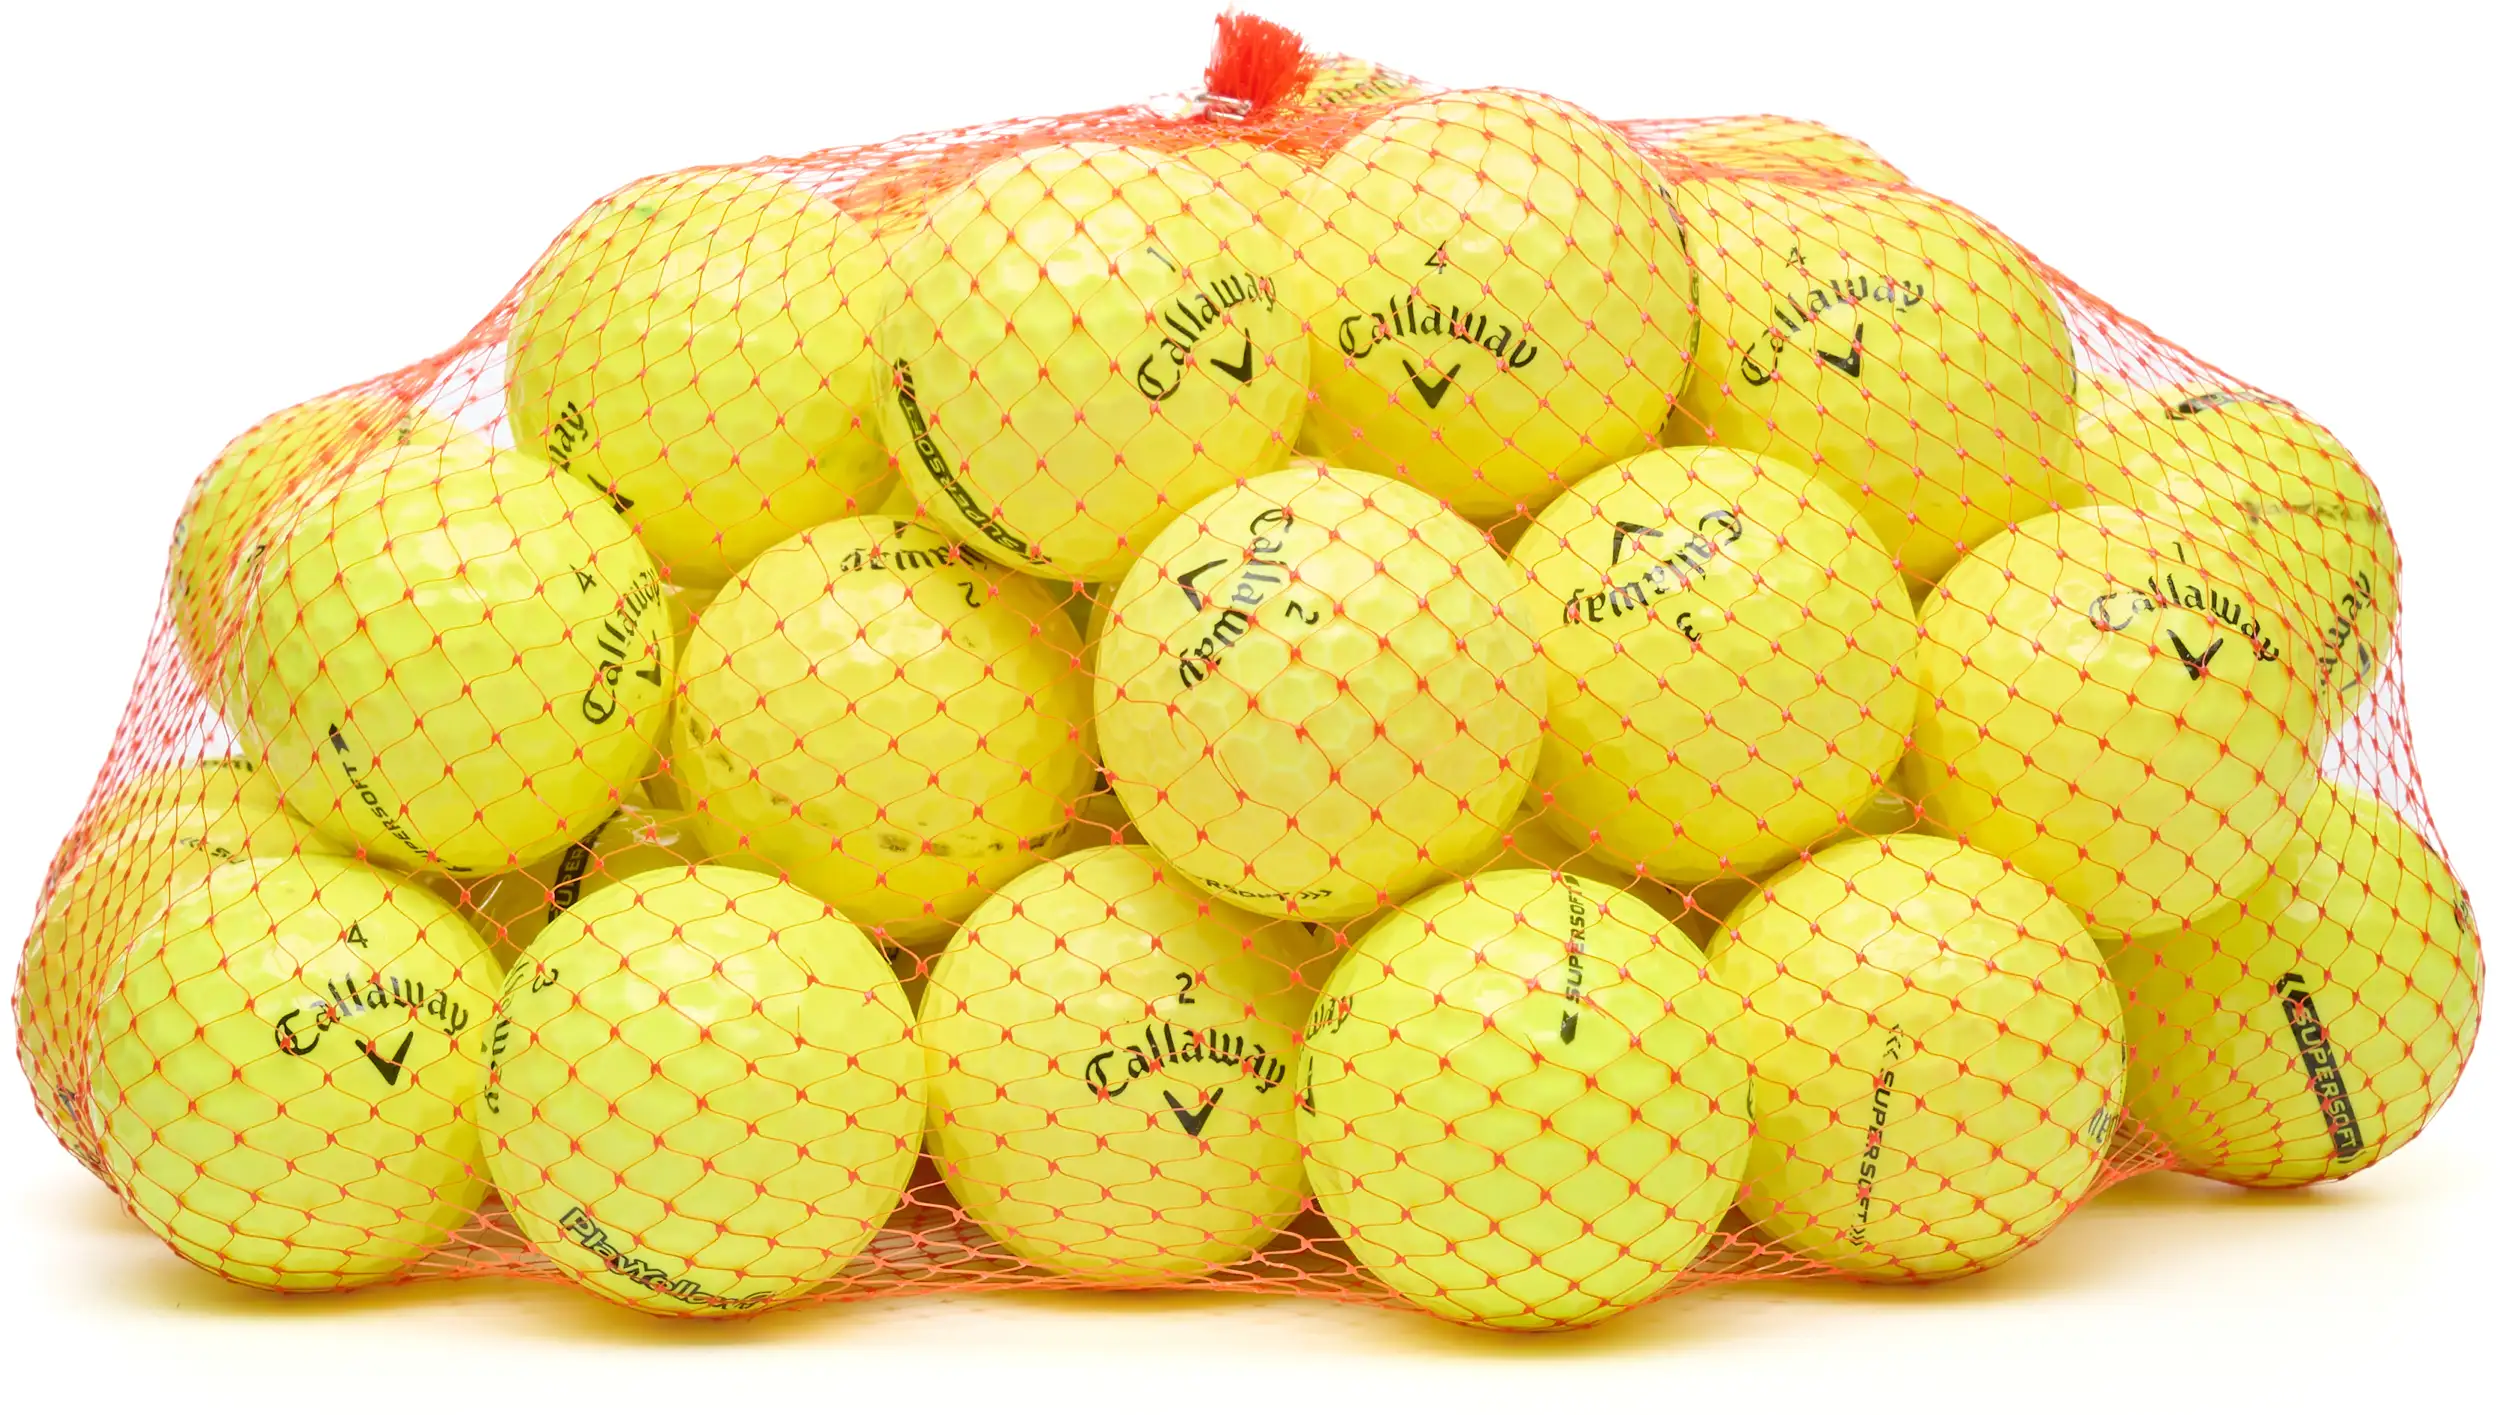 50 Callaway Supersoft Lakeballs, yellow